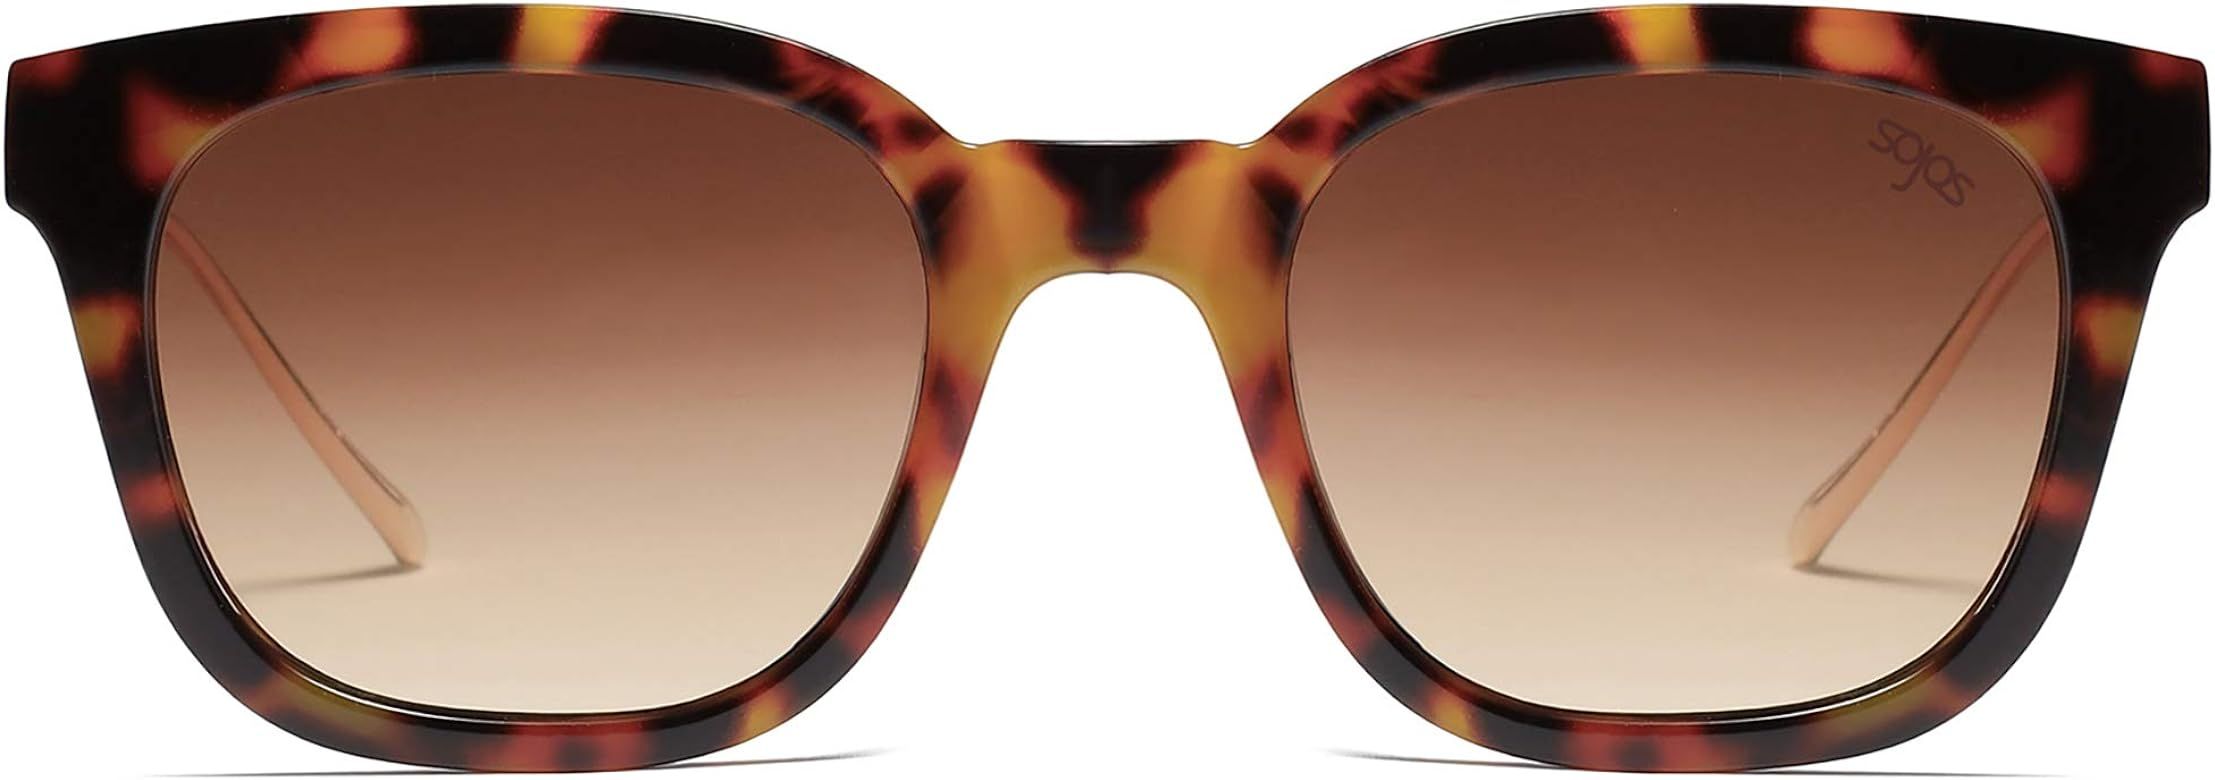 SOJOS Classic Square Polarized Sunglasses for Women UV400 Sun Glasses SJ2050 | Amazon (US)